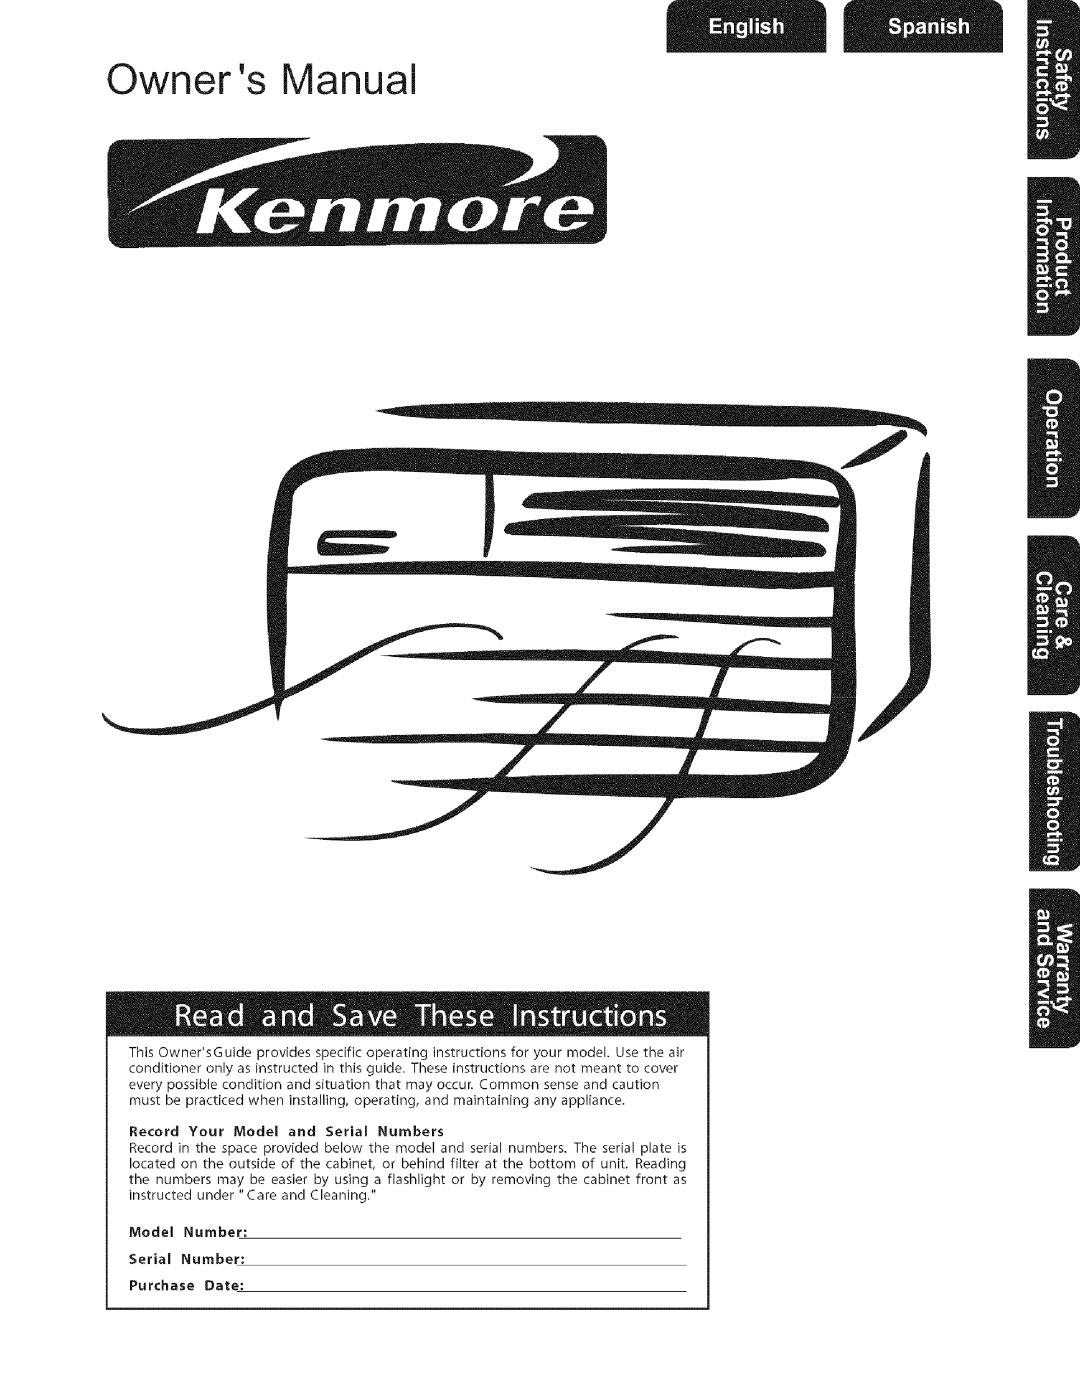 Kenmore Air Conditioner owner manual 